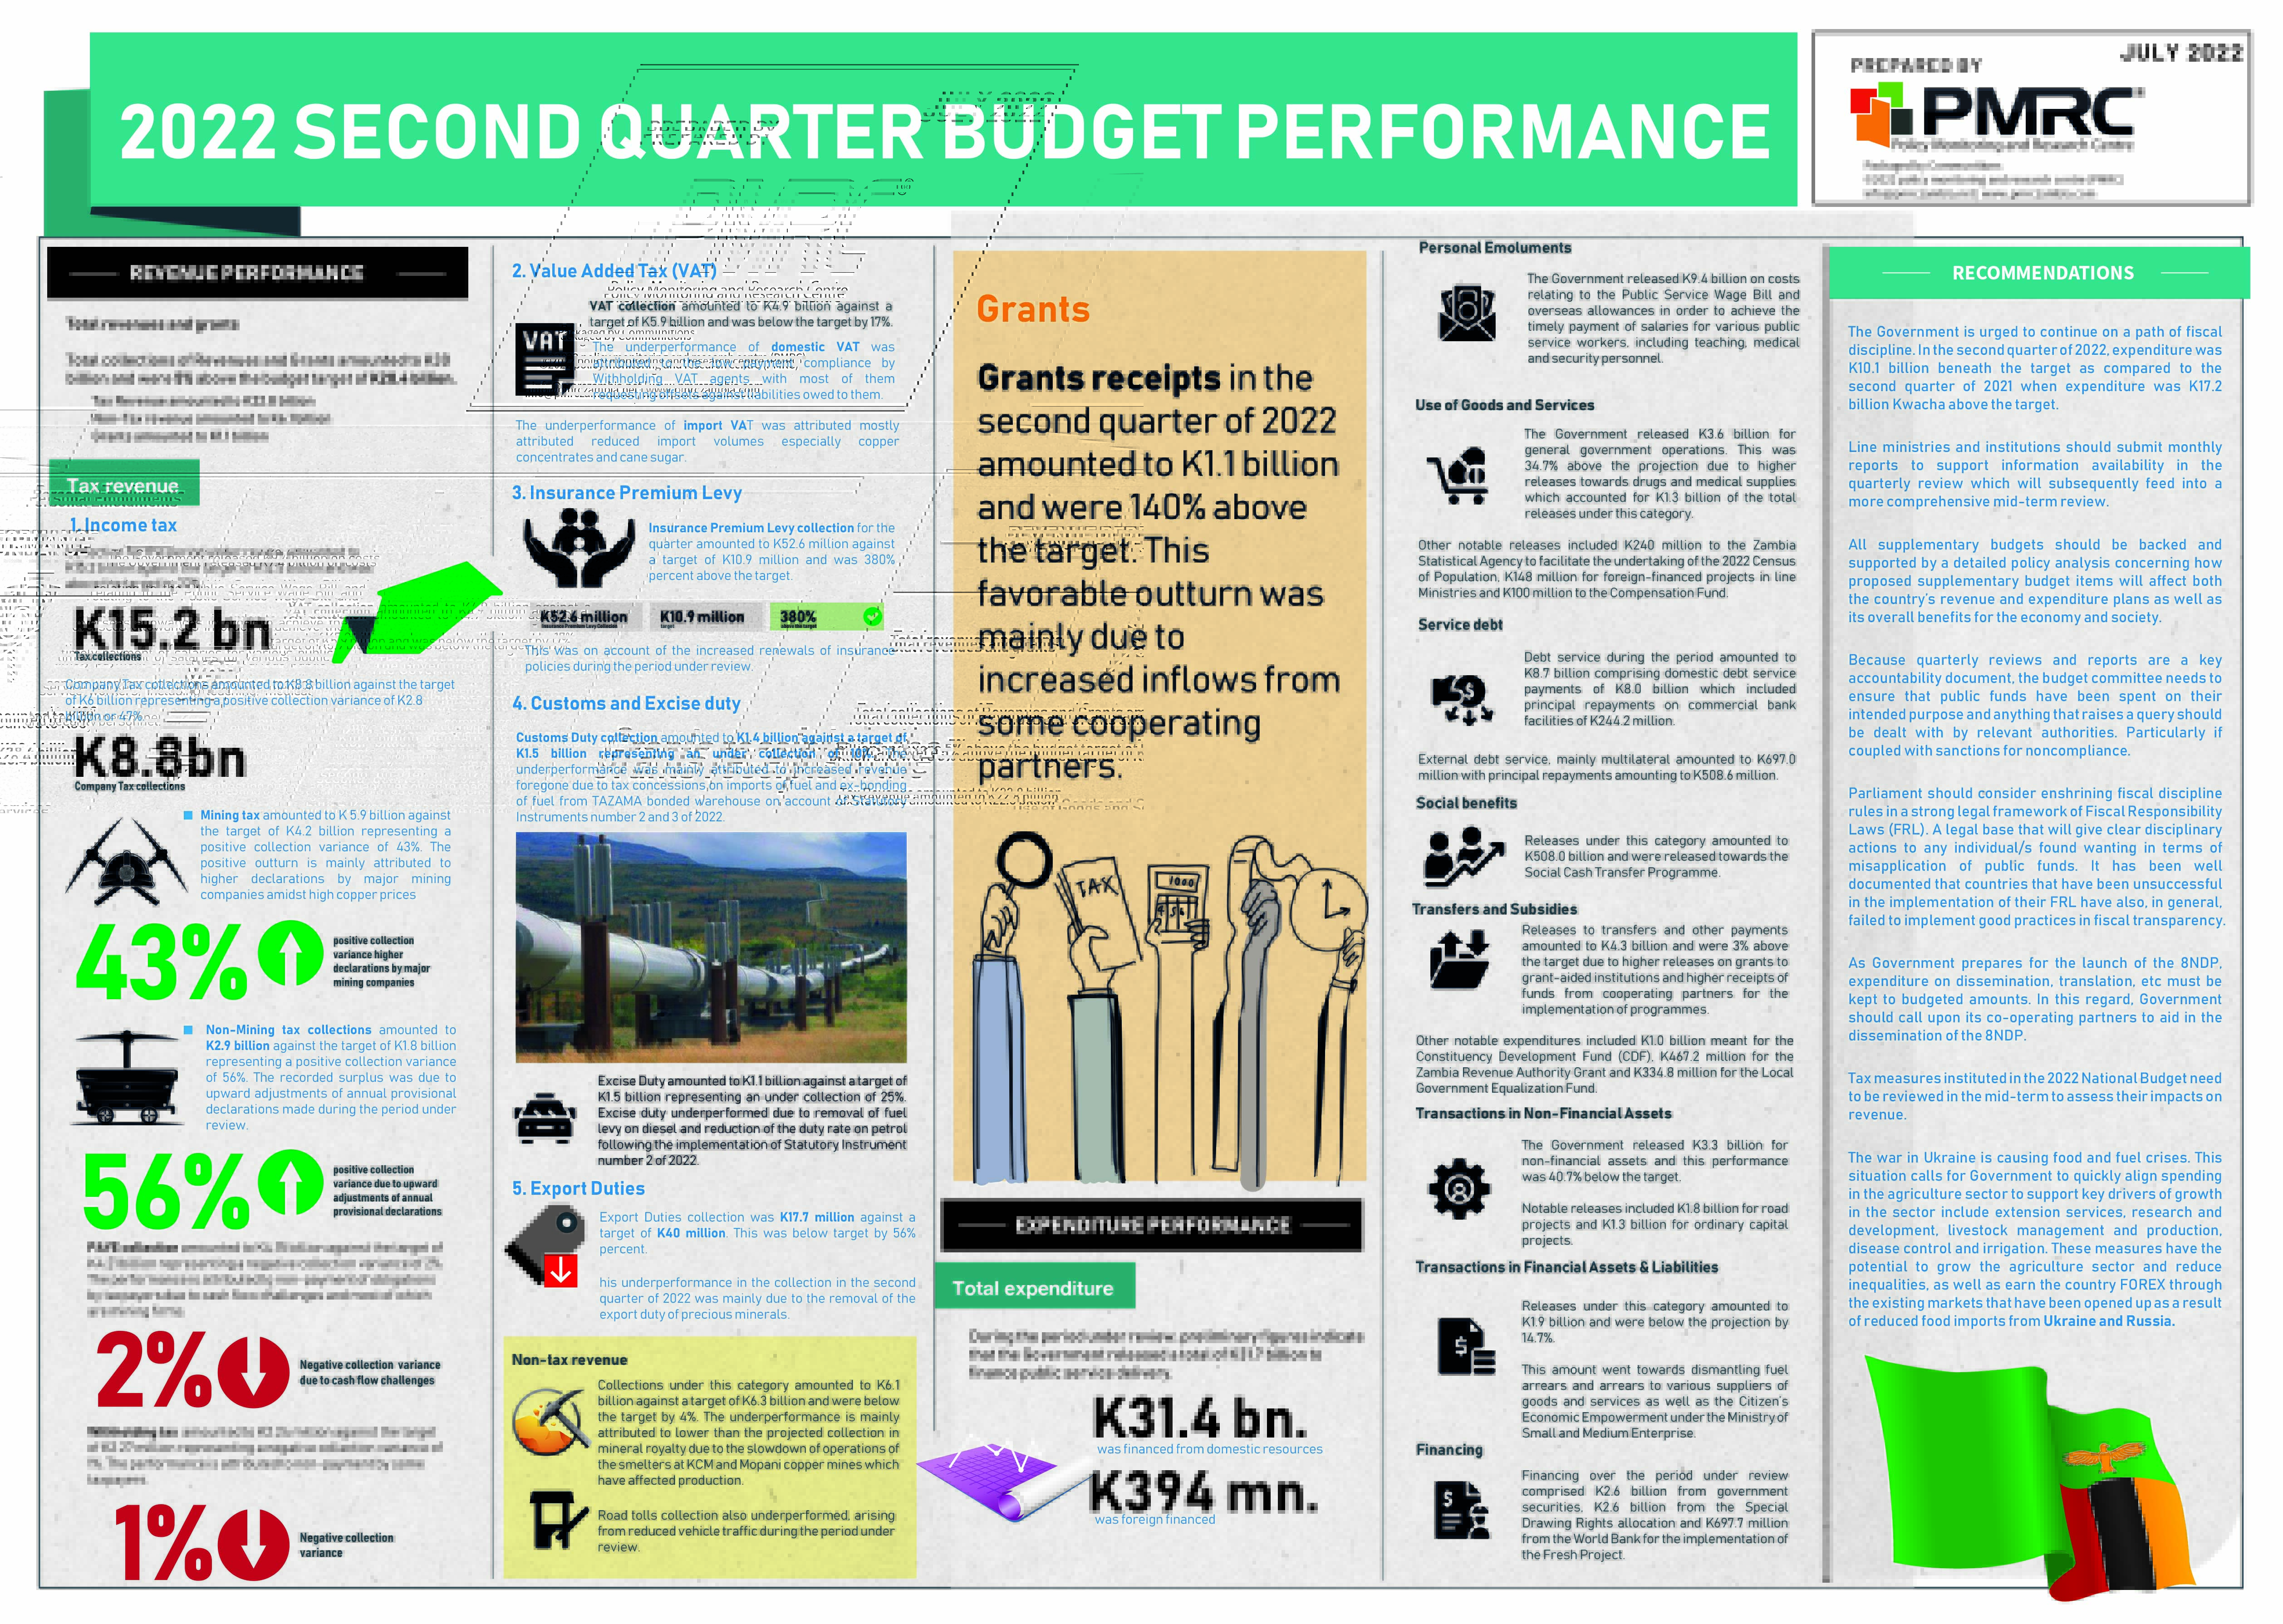 2022 Second Quarter Budget Performance – Infographic